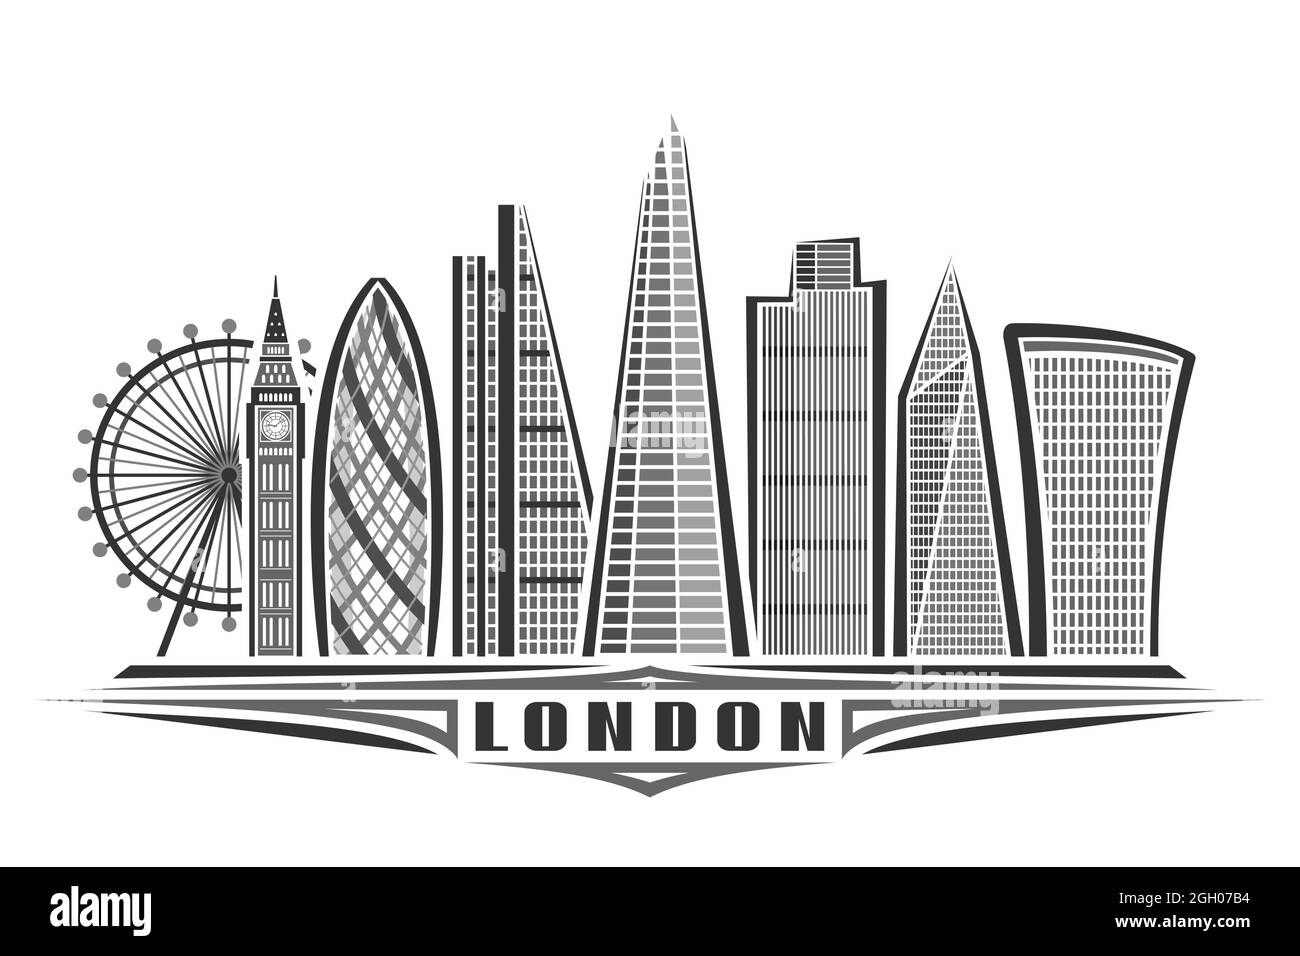 Vector illustration of London, monochrome horizontal poster with linear design famous london city scape, urban line art concept with unique decorative Stock Vector